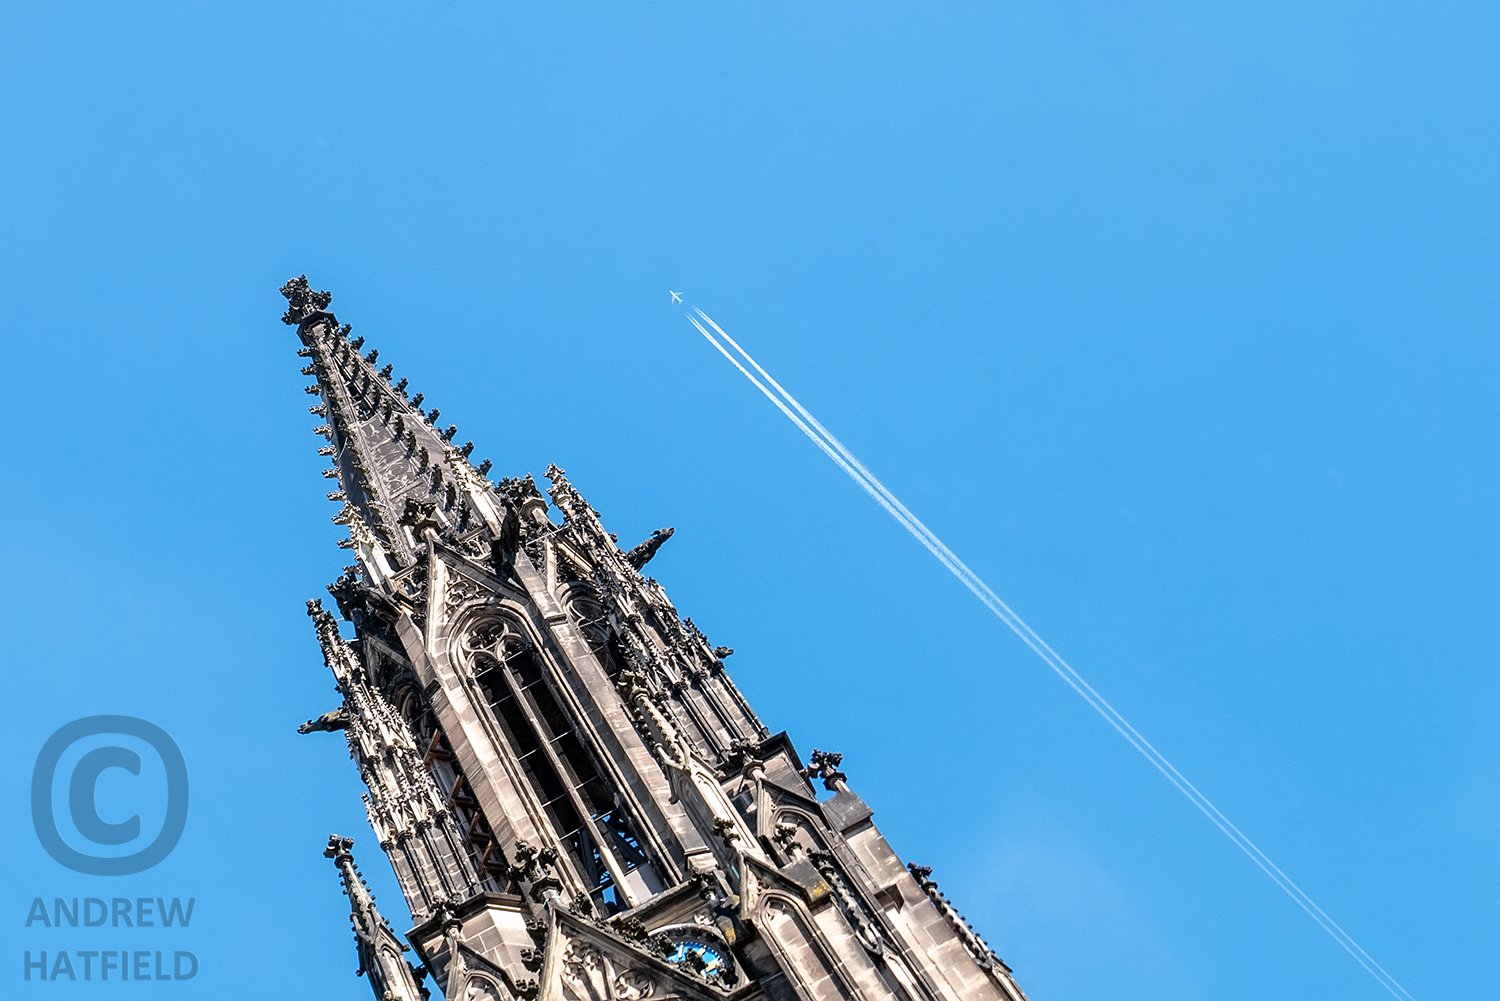 Architectural+image+spire+of+Offene+Kirche+Elisabethen+Basel+against+blue+sky+with+vapor+trail+above+P1090739.jpg